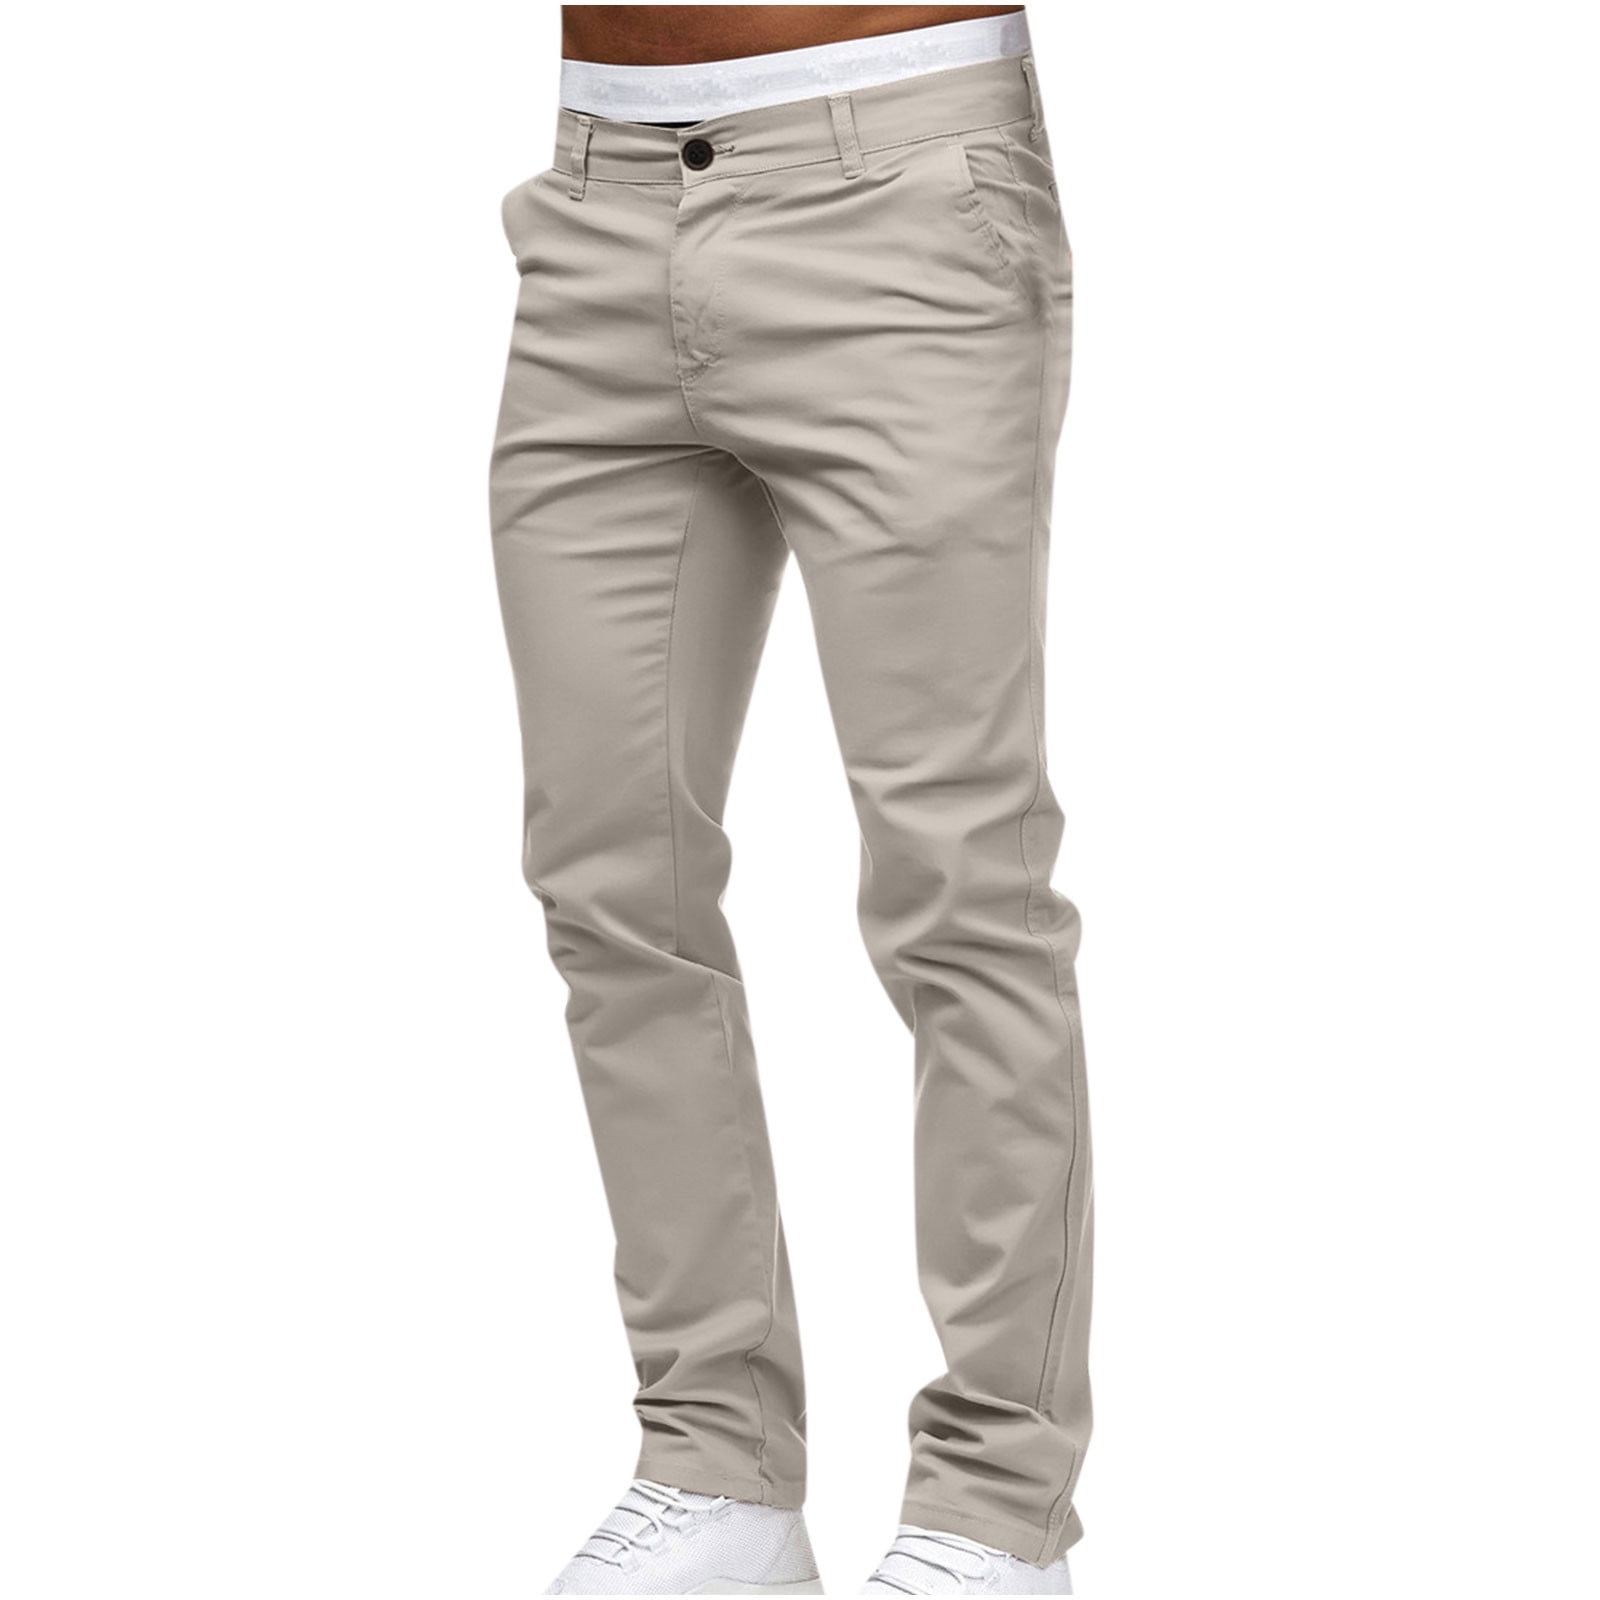 gakvov Cargo Pants For Men Men's Casual Button Open Slim Fit Straight ...